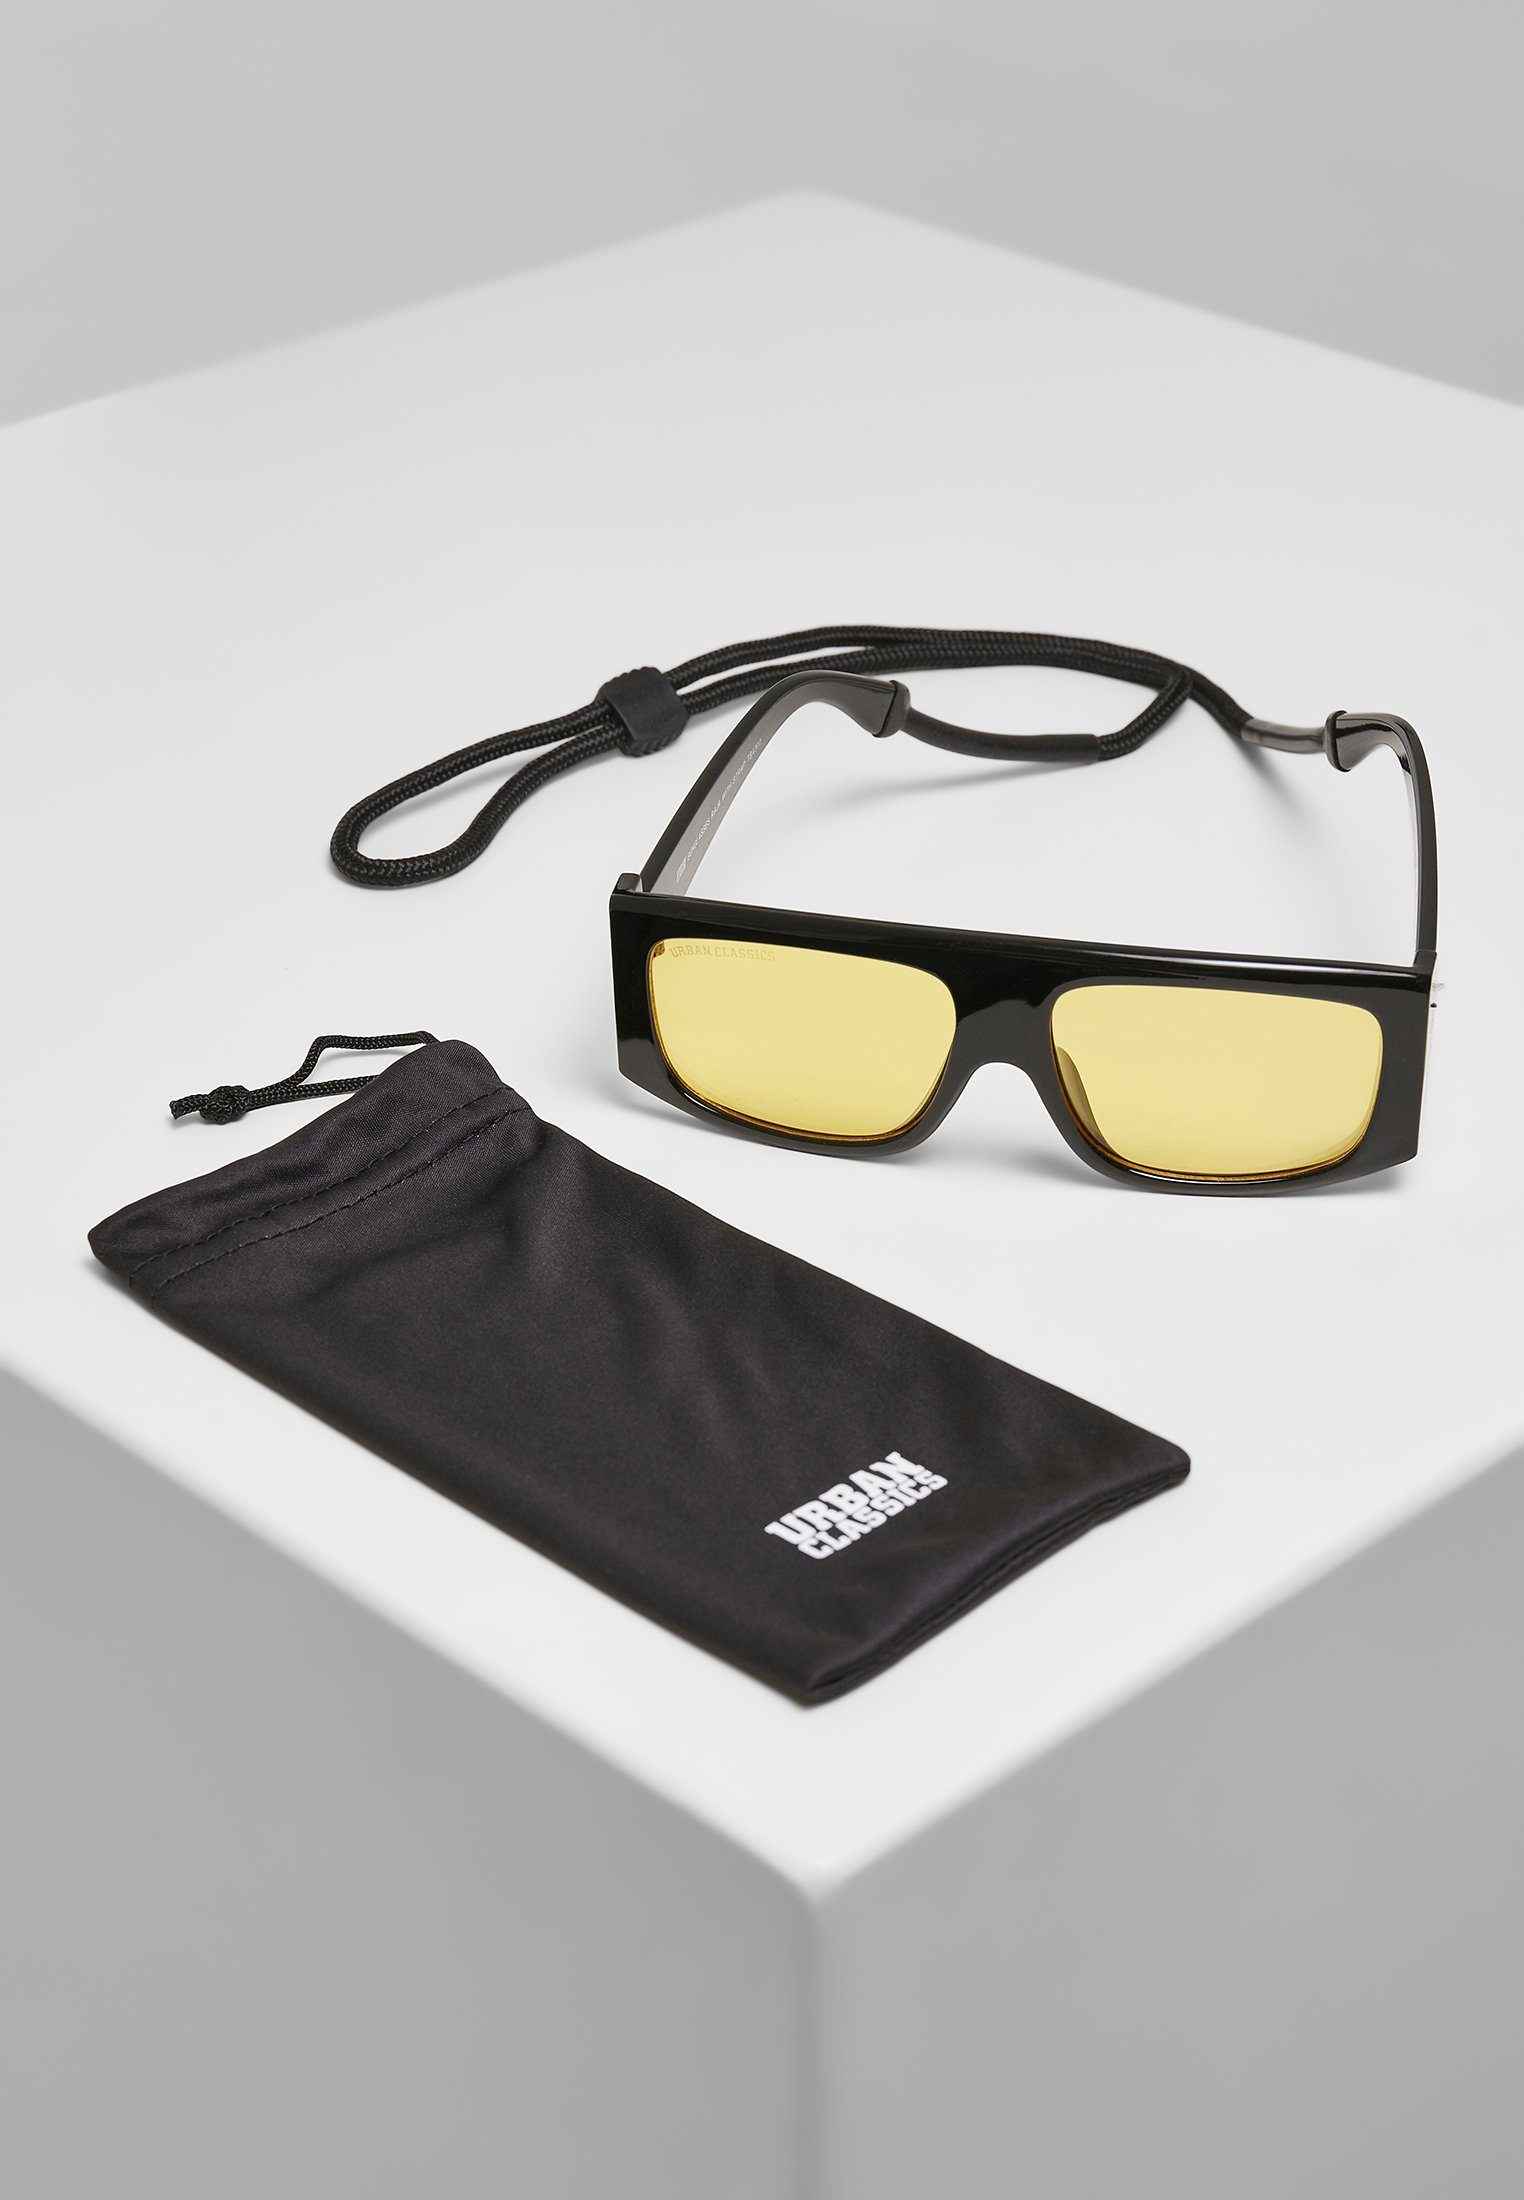 Sonnenbrille CLASSICS Raja Strap Sunglasses URBAN with Unisex